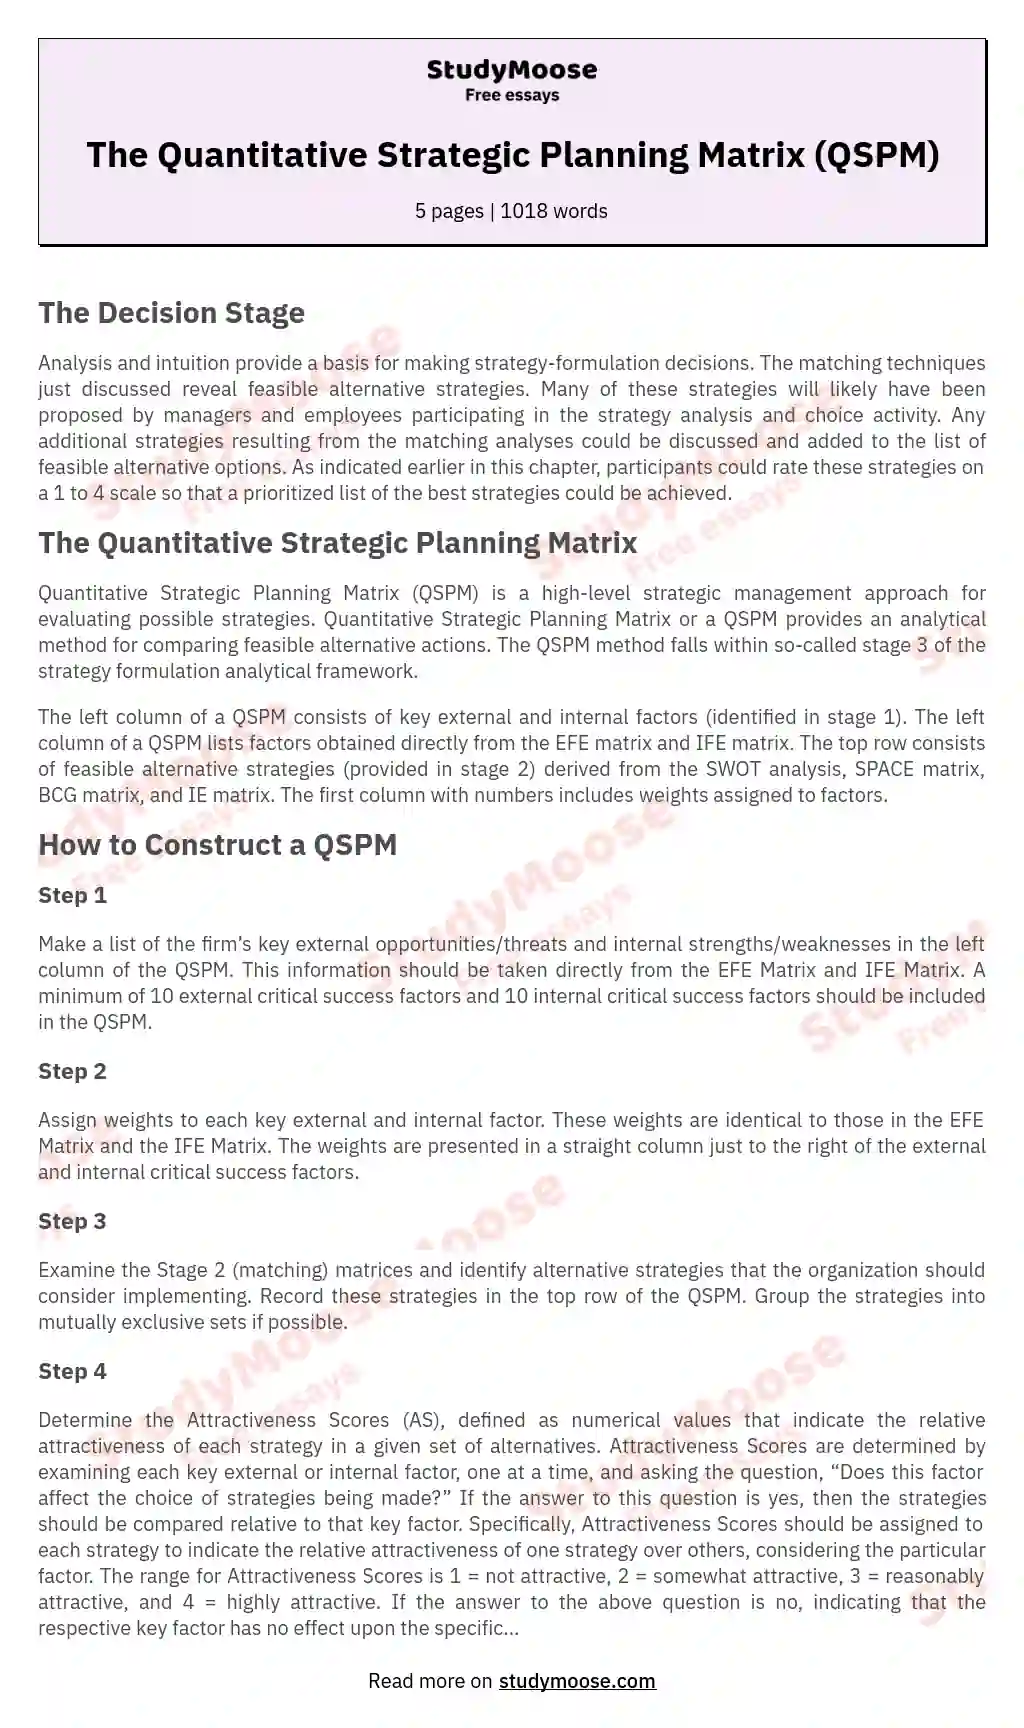 The Quantitative Strategic Planning Matrix (QSPM) essay